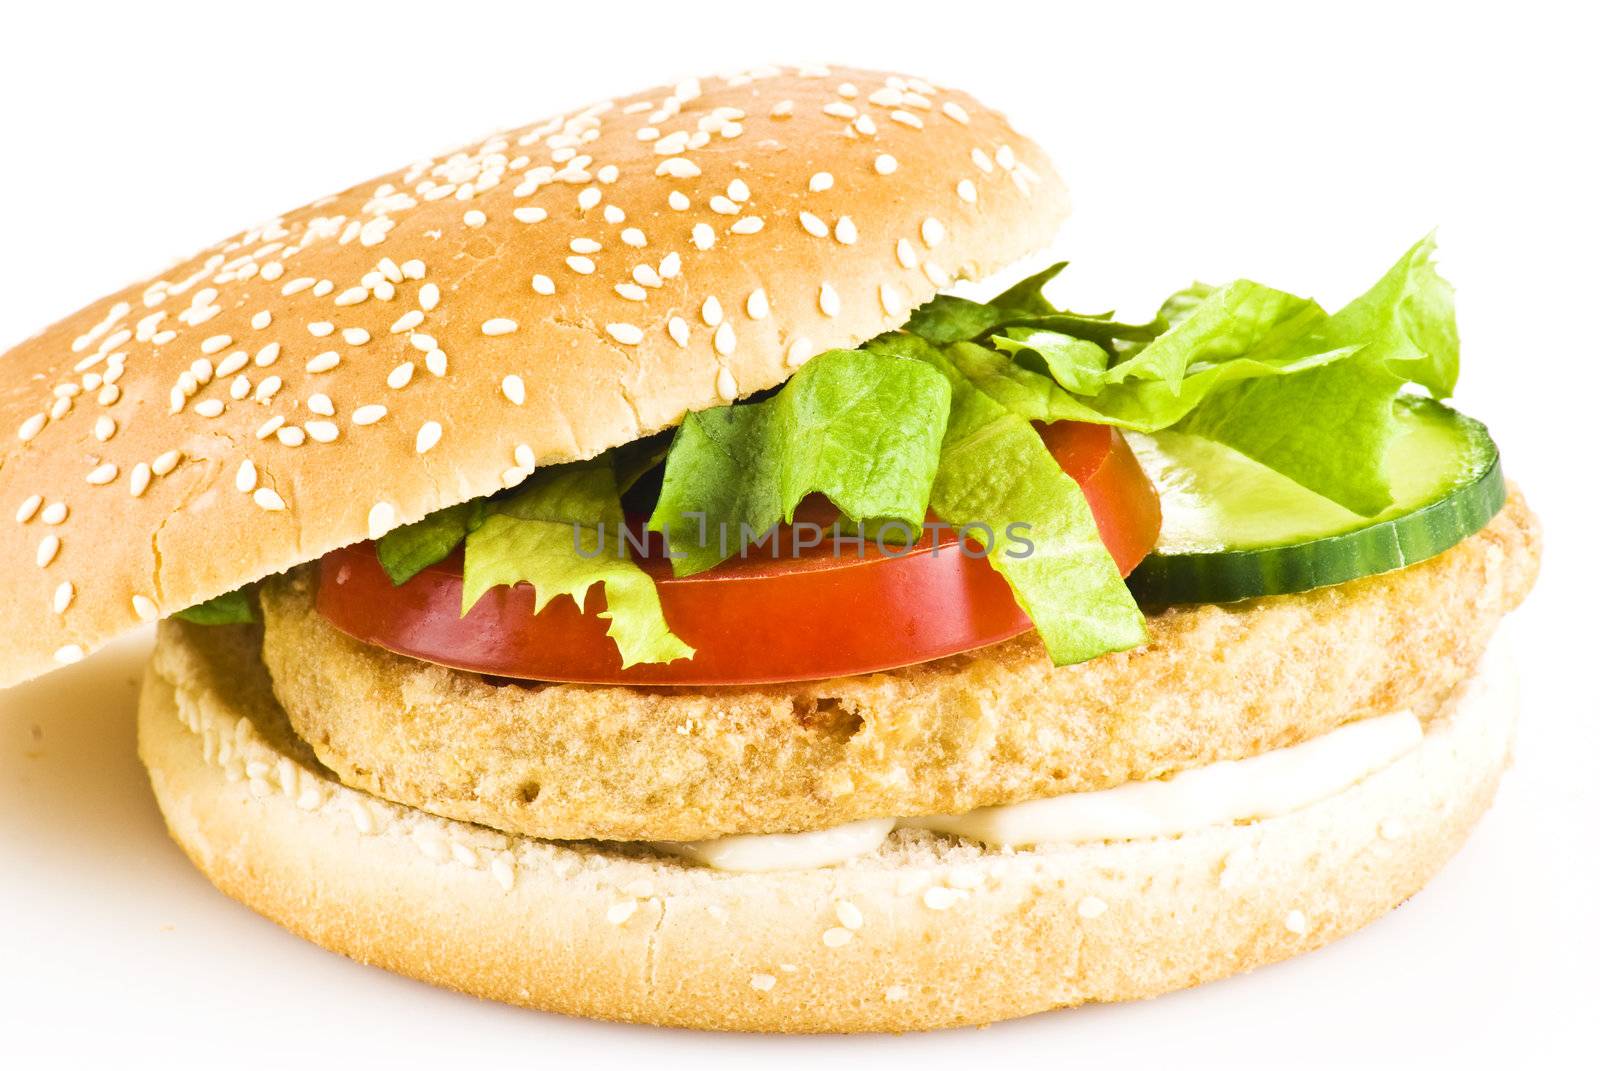 Chicken burger by caldix